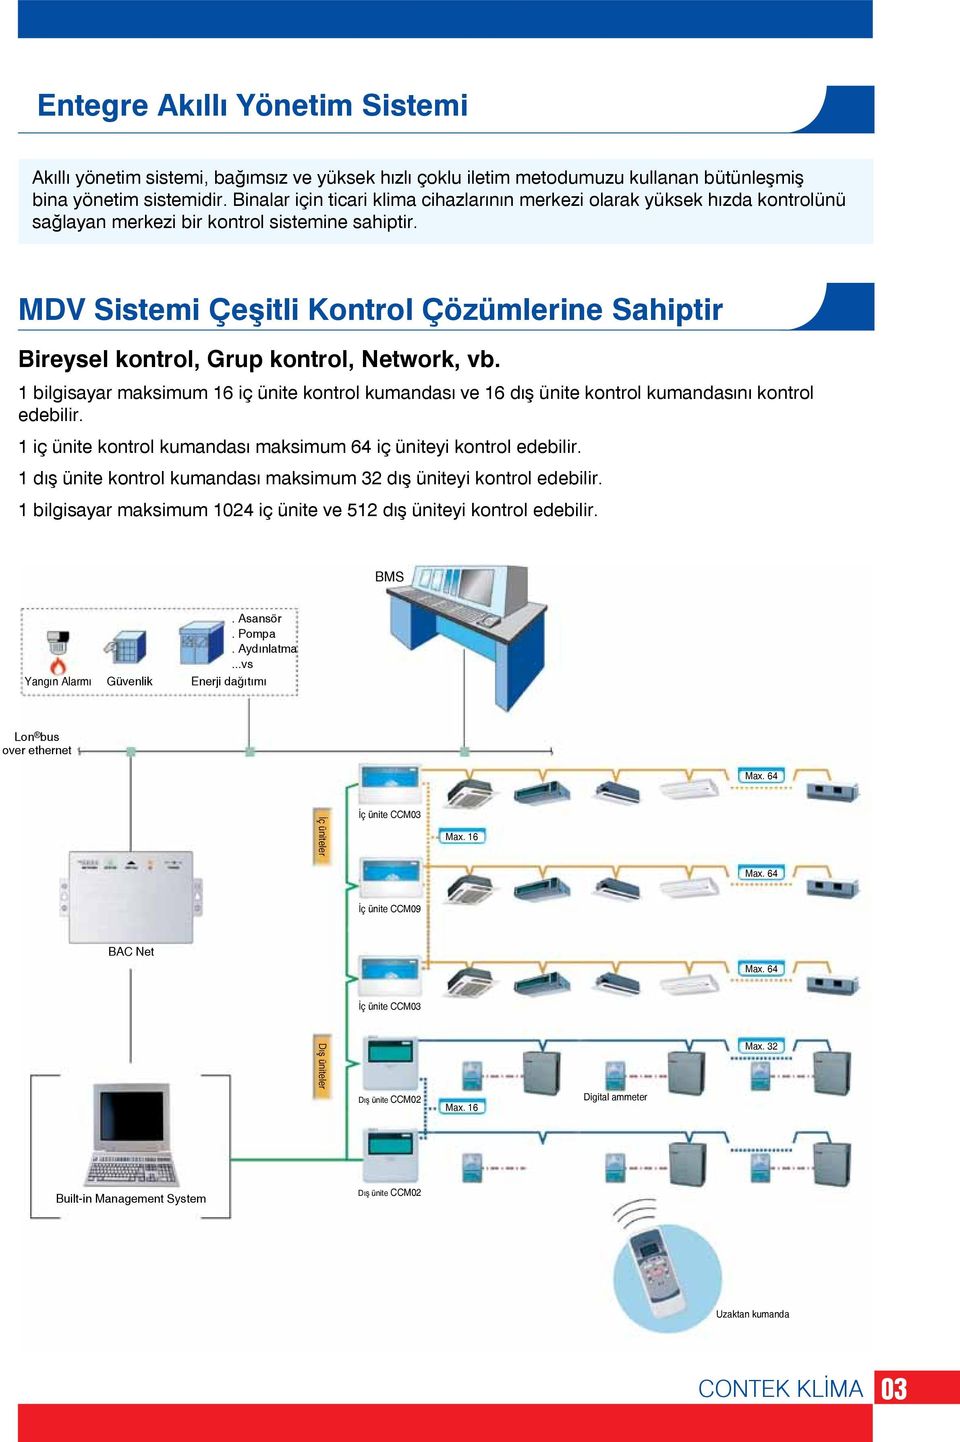 MDV Sistemi Çeşitli Kontrol Çözümlerine Sahiptir Bireysel kontrol, Grup kontrol, Network, vb. bilgisayar maksimum 6 iç ünite kontrol kumandası ve 6 dış ünite kontrol kumandasını kontrol edebilir.